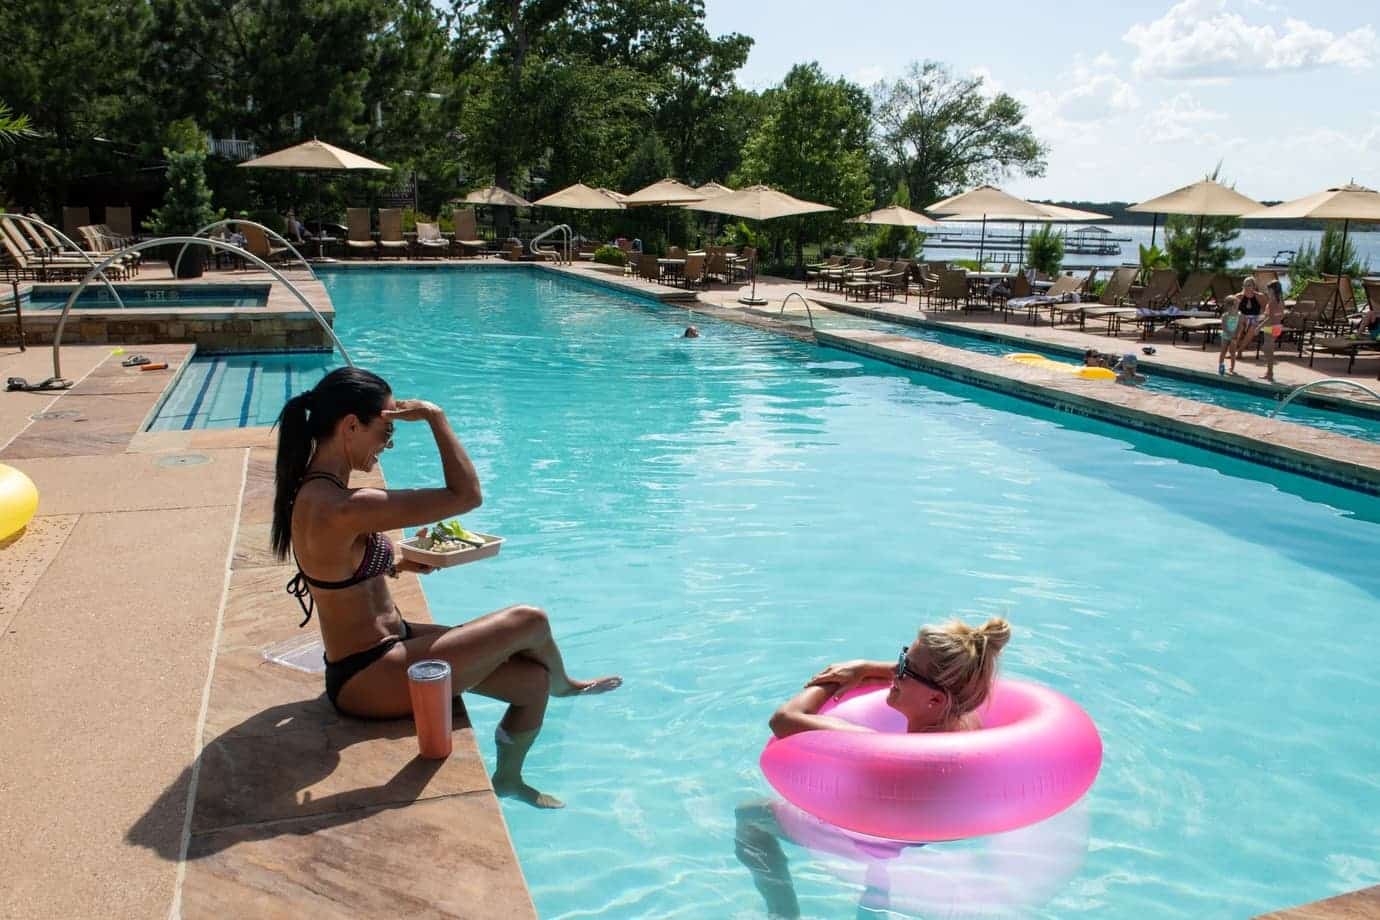 2 women enjoying the community pool at long cove